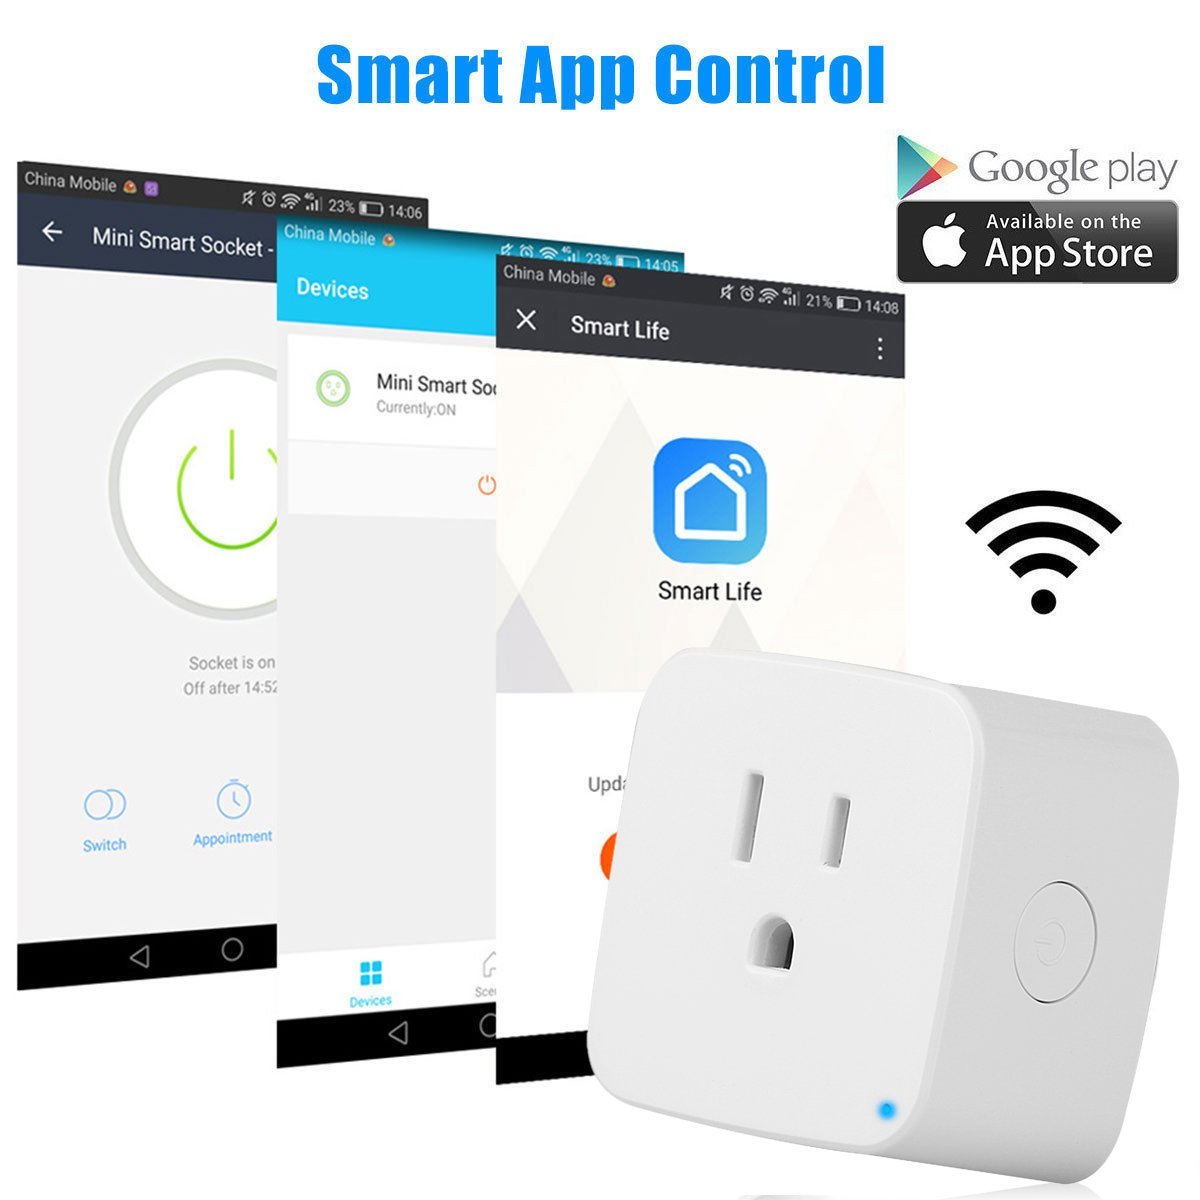 Wi-Fi Smart Plug – LinkStyle